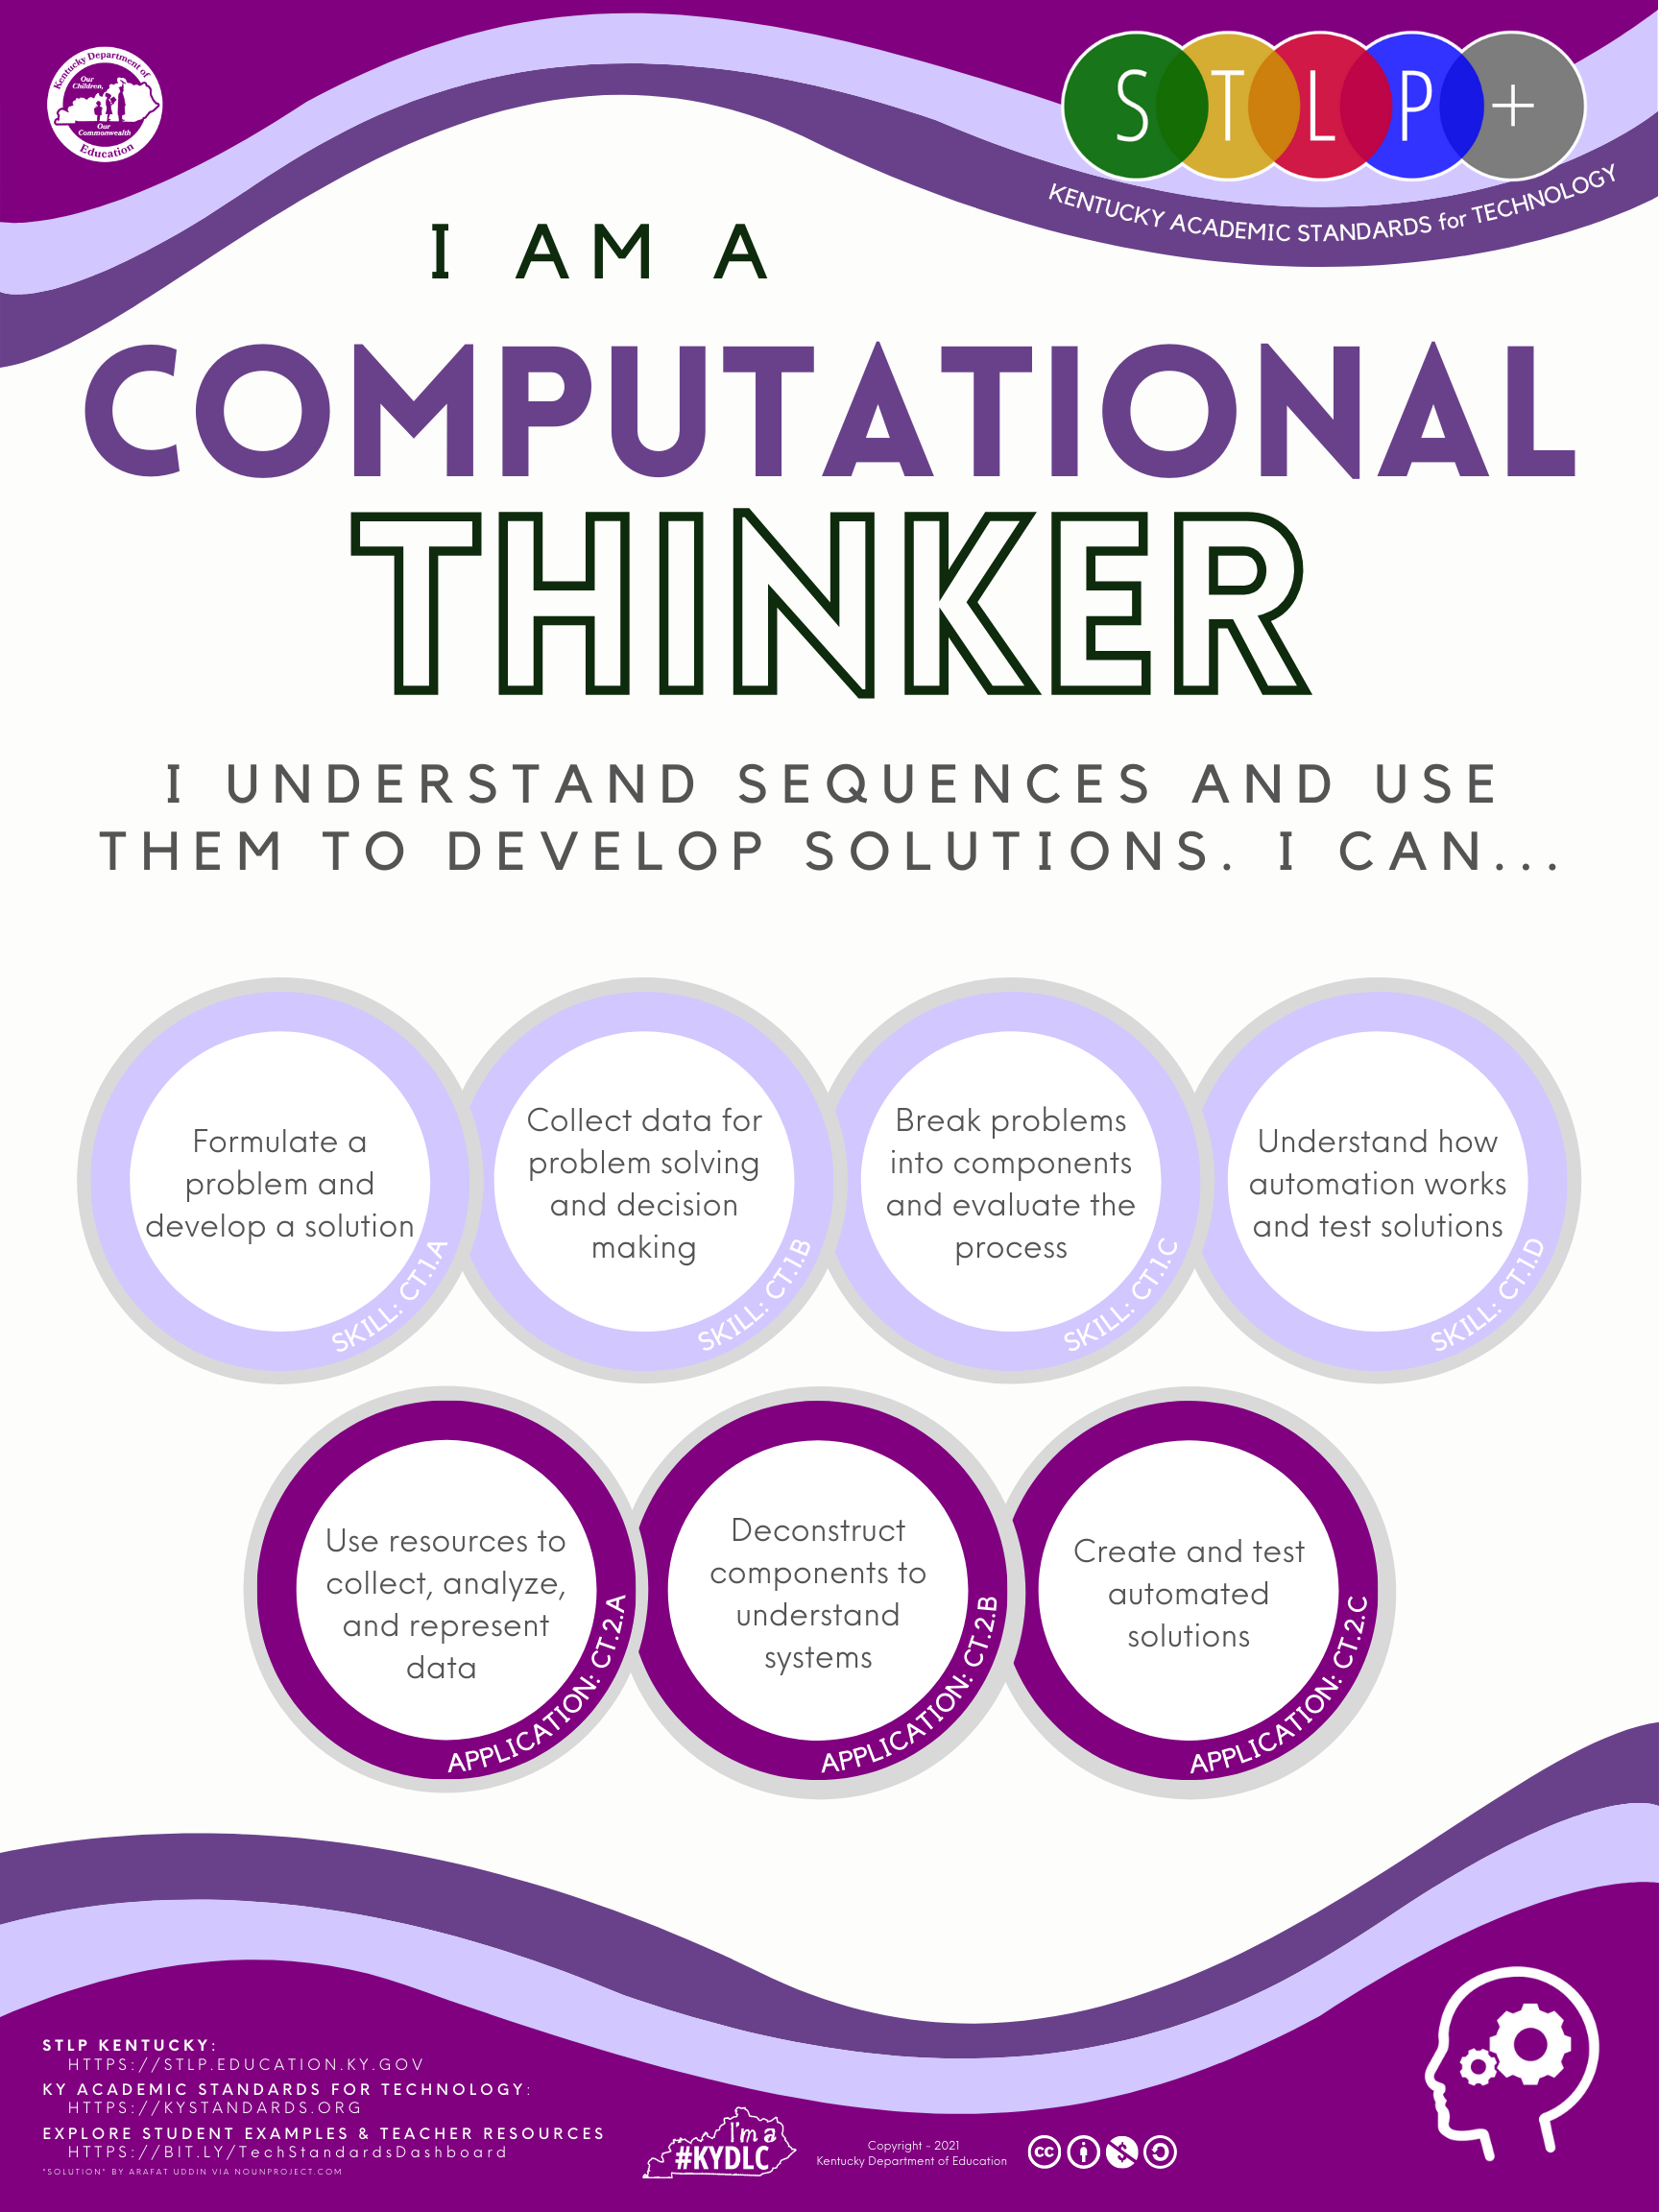 STLP ISTE Standards poster: Computational Thinker